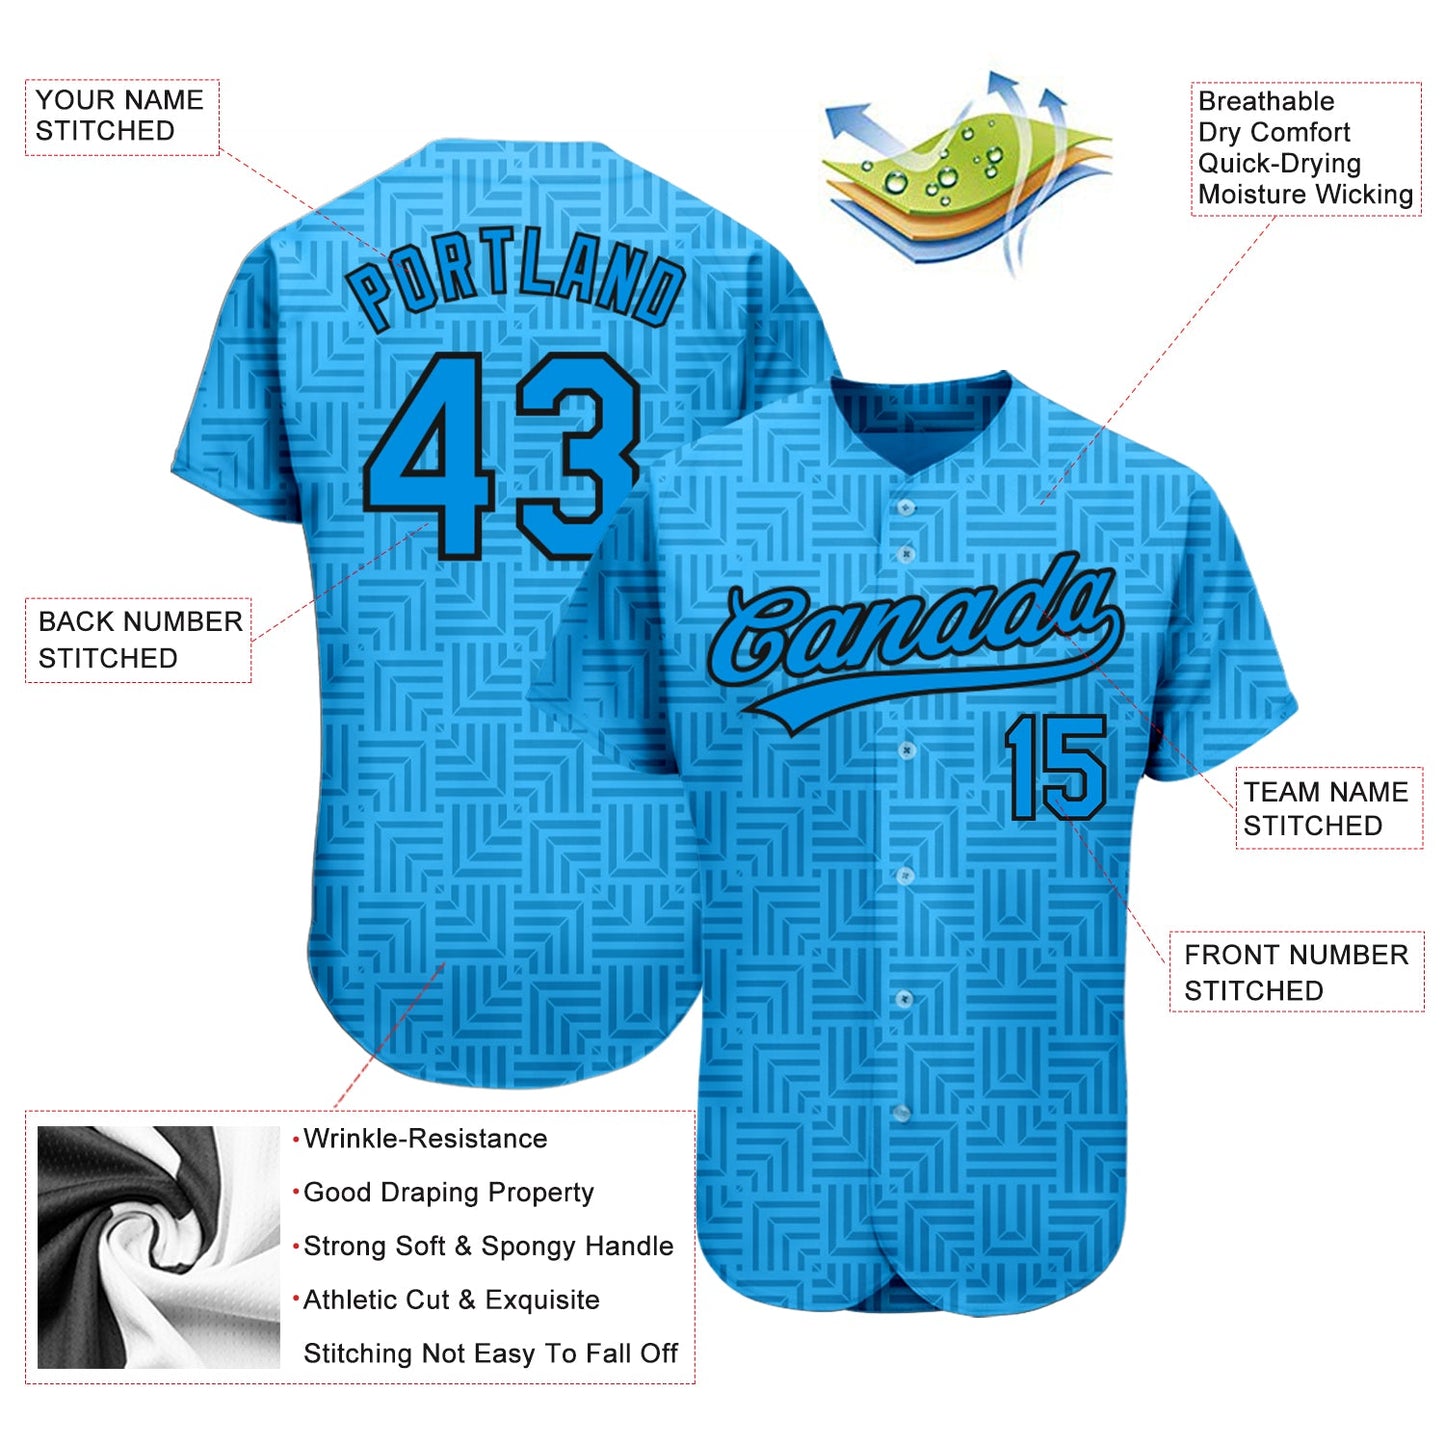 Custom Blue Blue-Black 3D Pattern Design Authentic Baseball Jersey